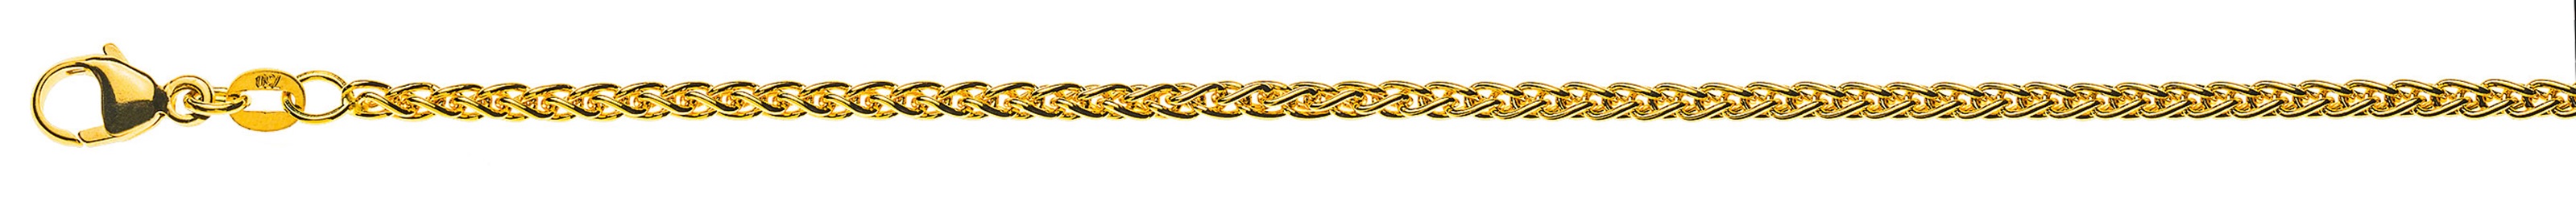 AURONOS Prestige Necklace yellow gold 18K cable chain 45cm 2.5mm